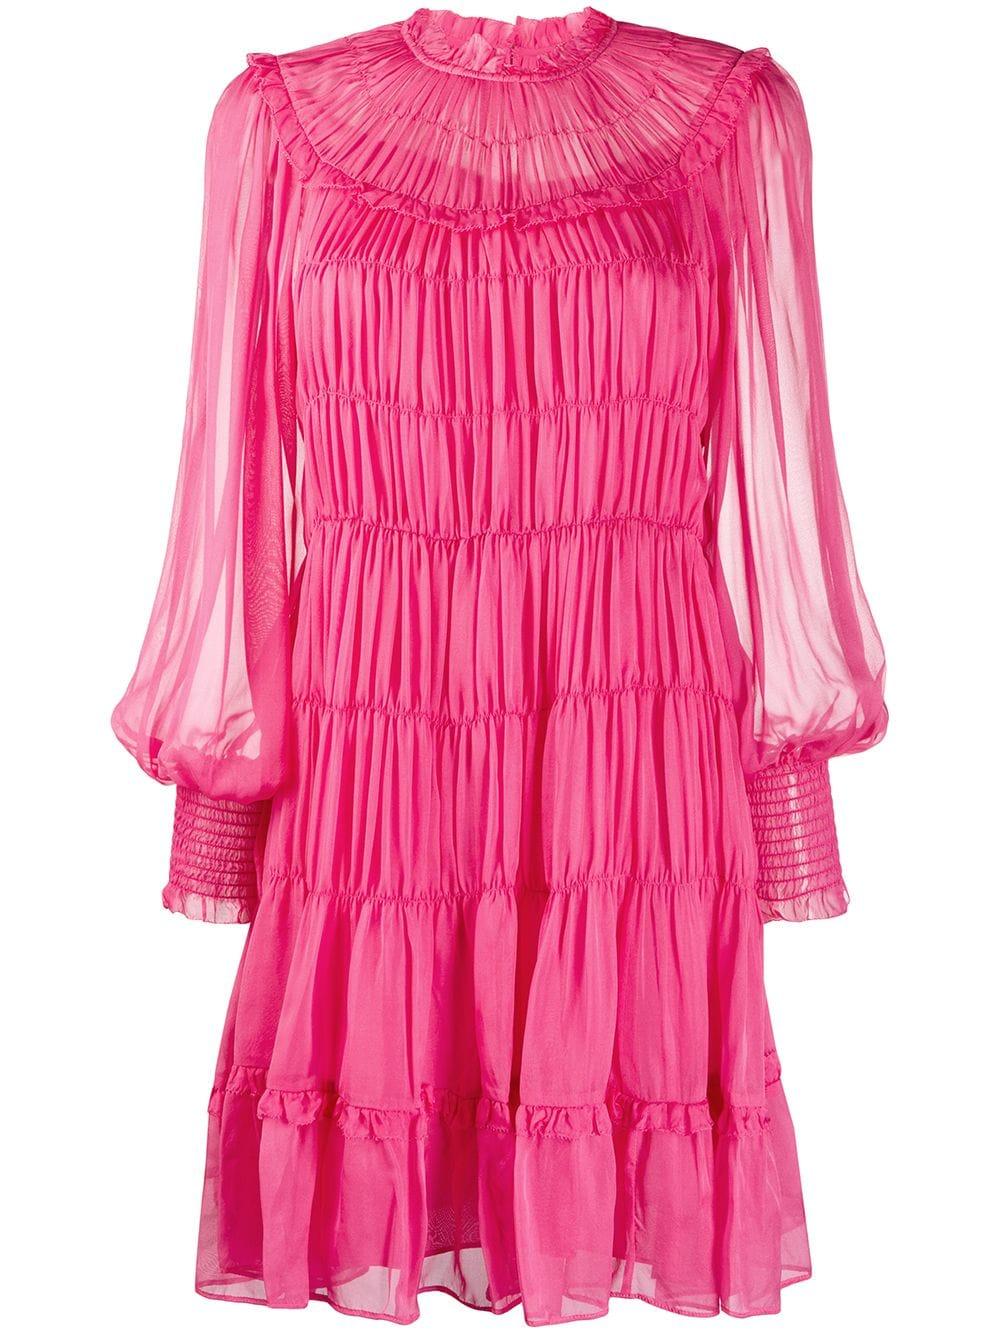 Ulla Johnson Silk Emmeline Gathered Flared Dress in Rose (Pink) - Save ...